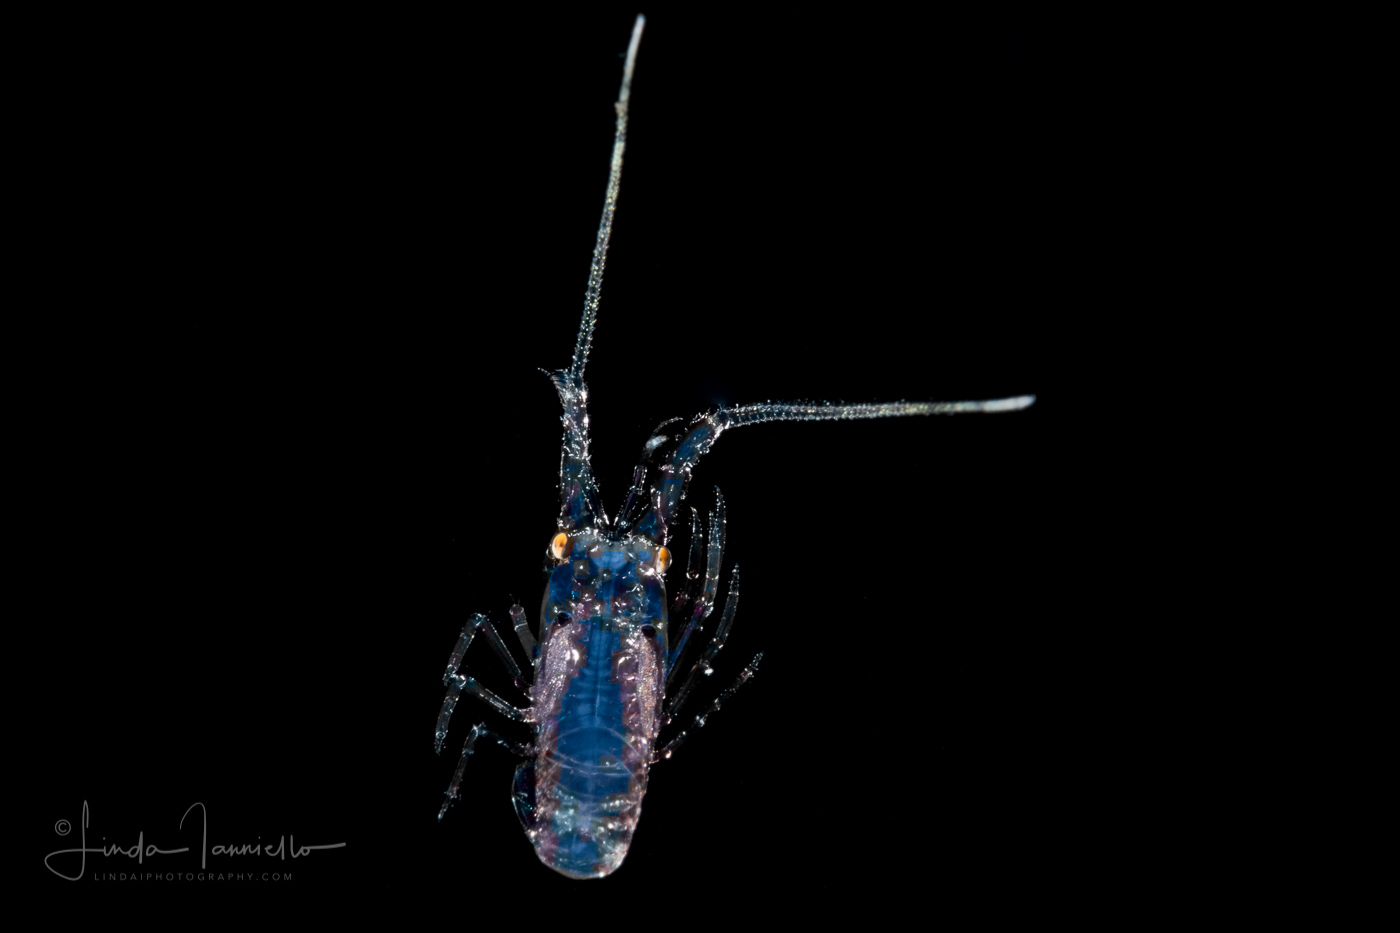 Caribbean Spiny Lobster - Palinuridae - Puerulus Stage Larva